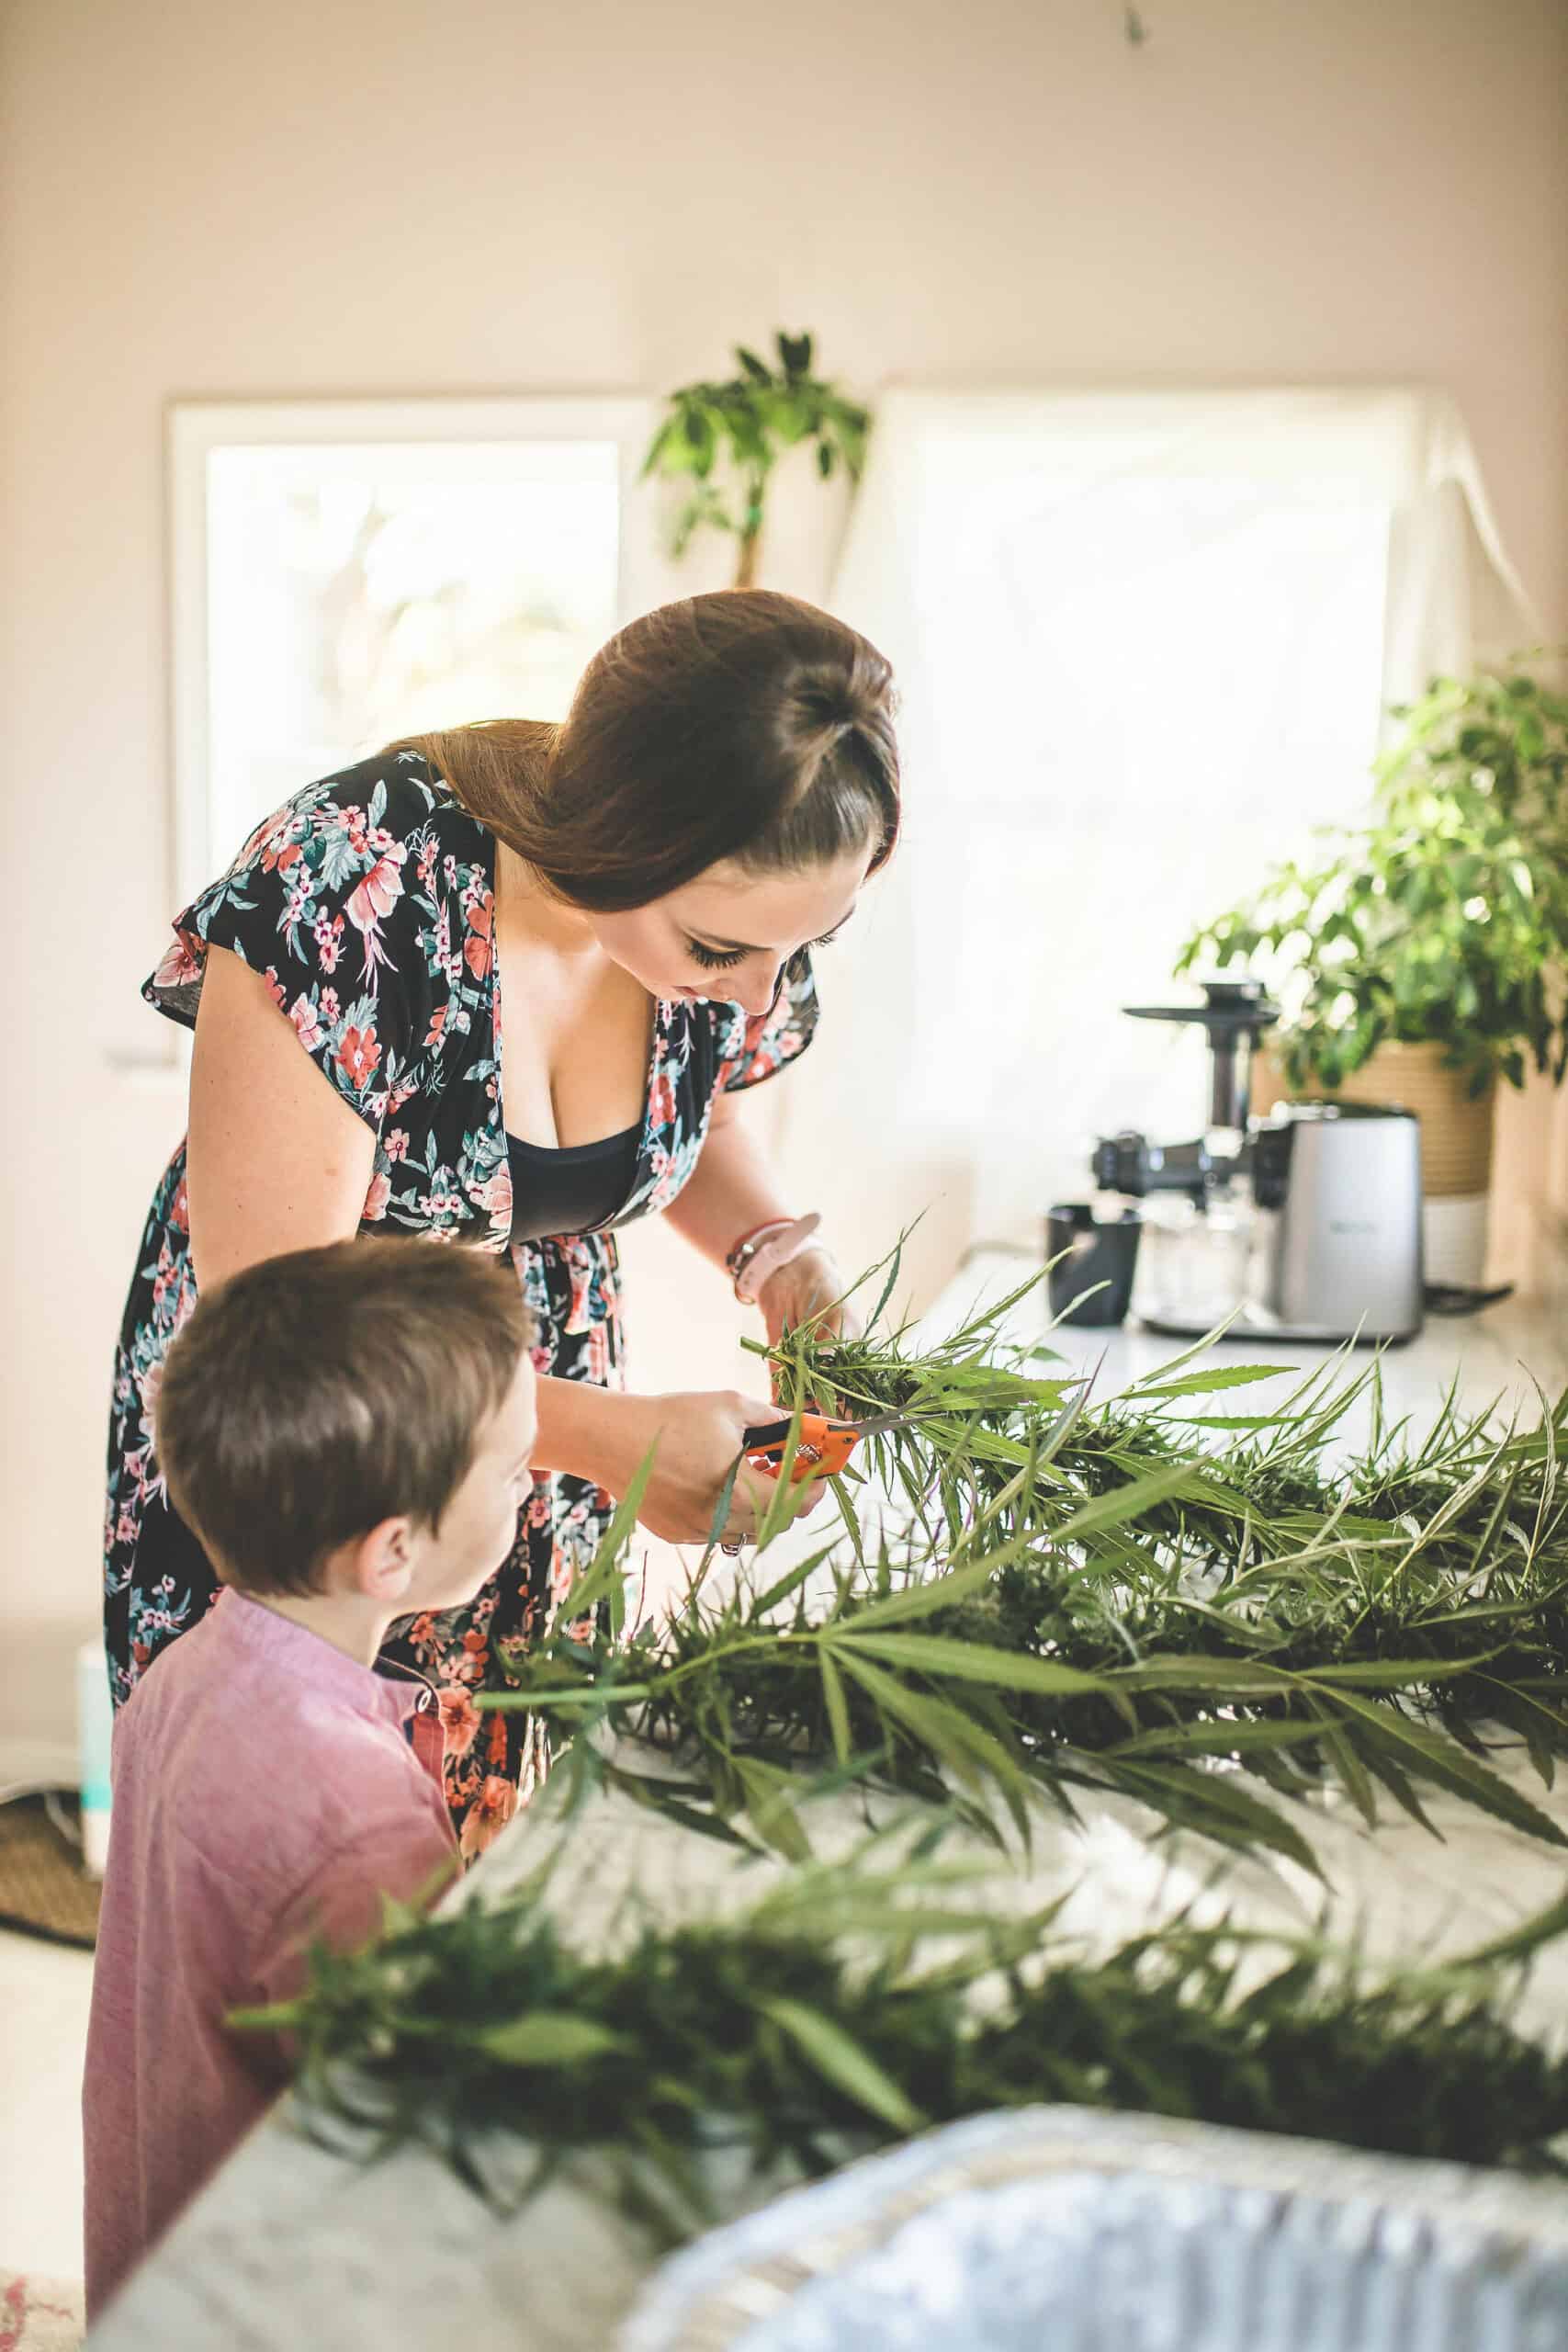 Emily Kyle harvesting cannabis plants.